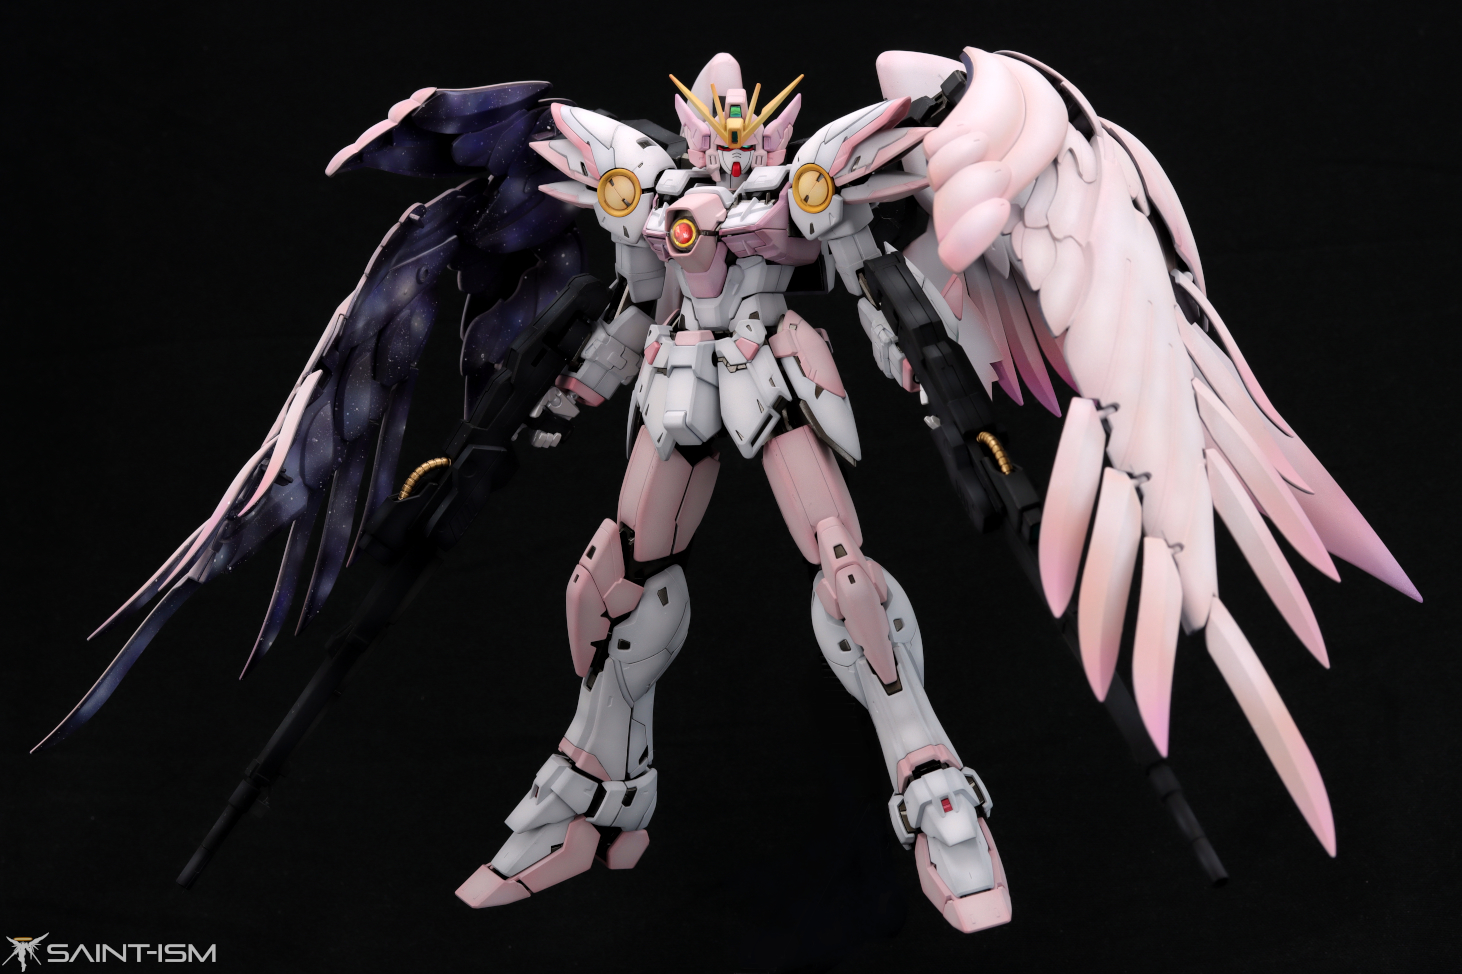 MG Wing Gundam World Zero EW (ver.Ka) build retrospective | Saint-ism